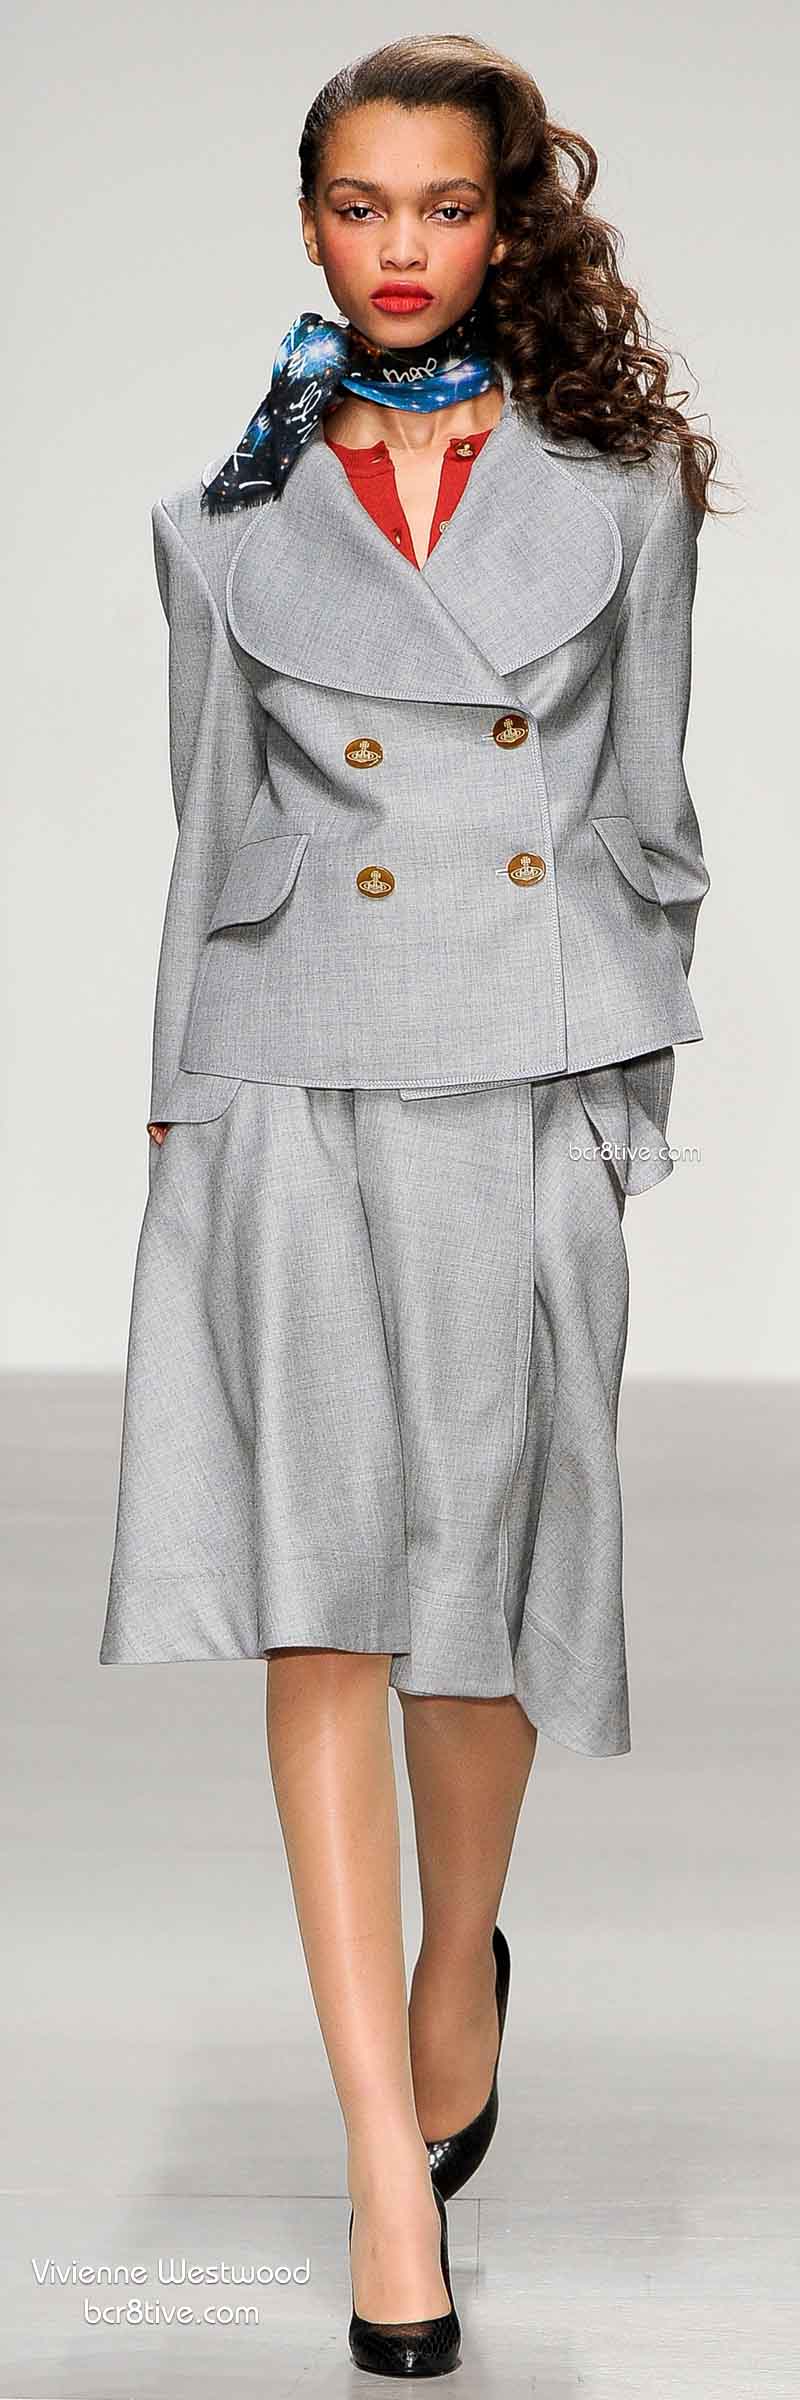 Fall 2014 Menswear Inspired Fashion - Vivienne Westwood